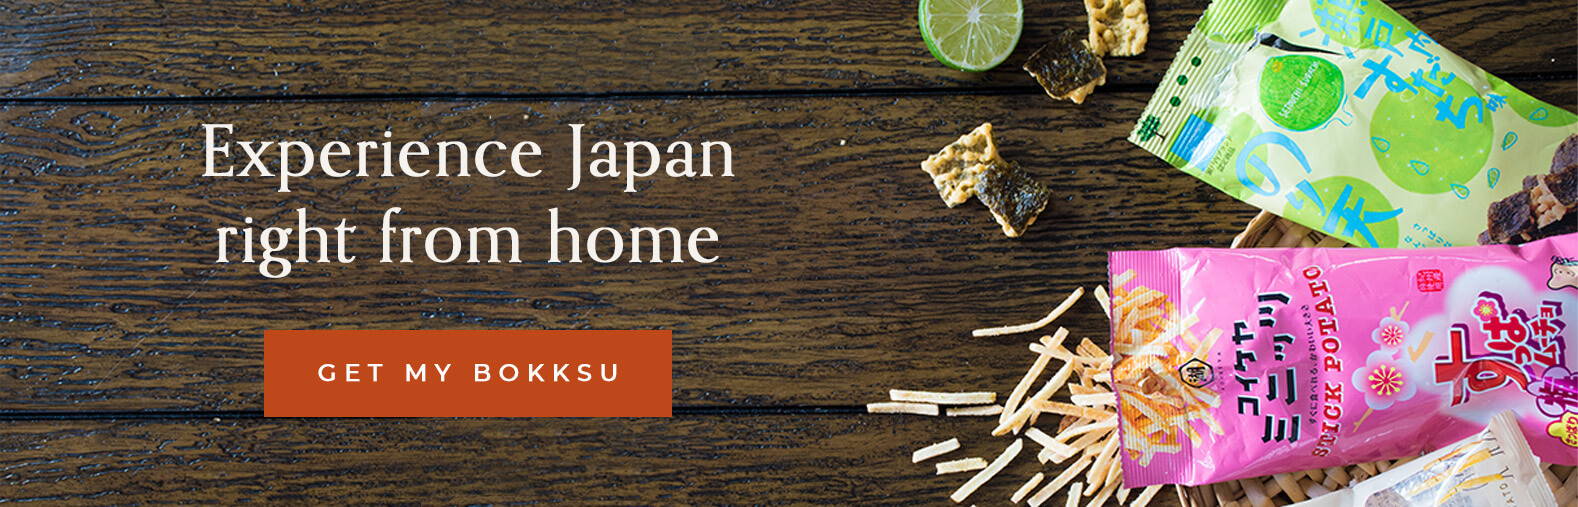 Bokksu japanese snack subscription box service